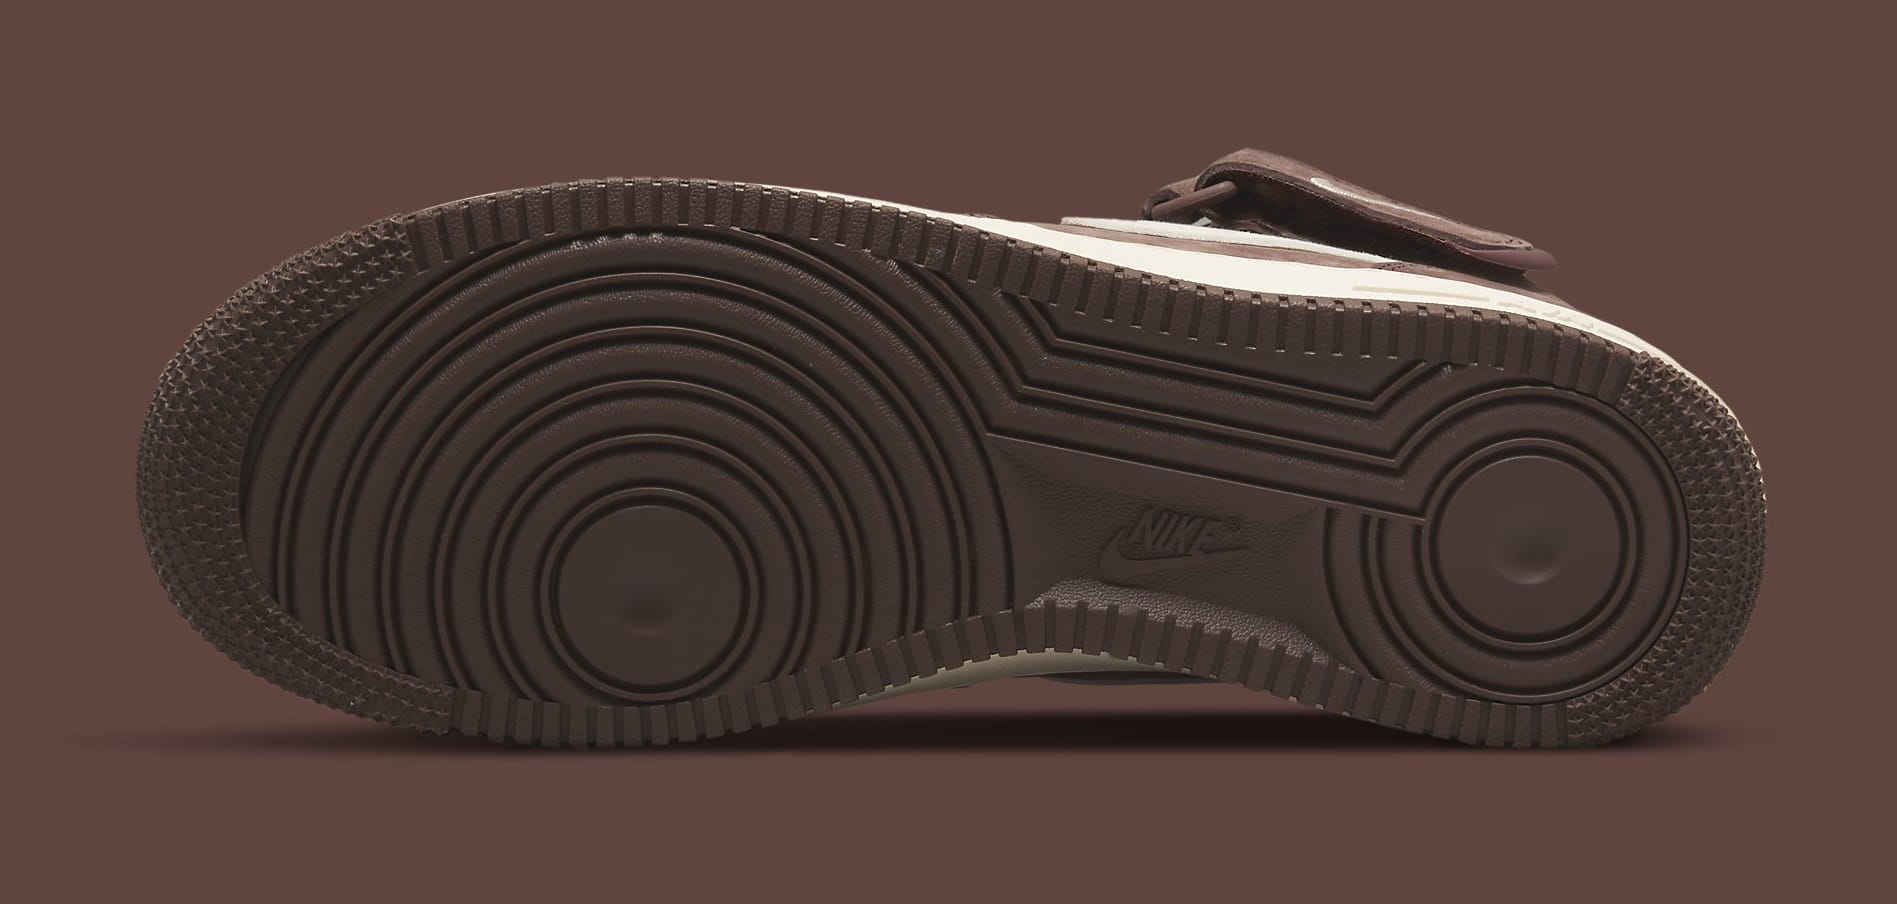 Nike Air Force 1 Mid QS Chocolate Men's - DM0107-200 - US